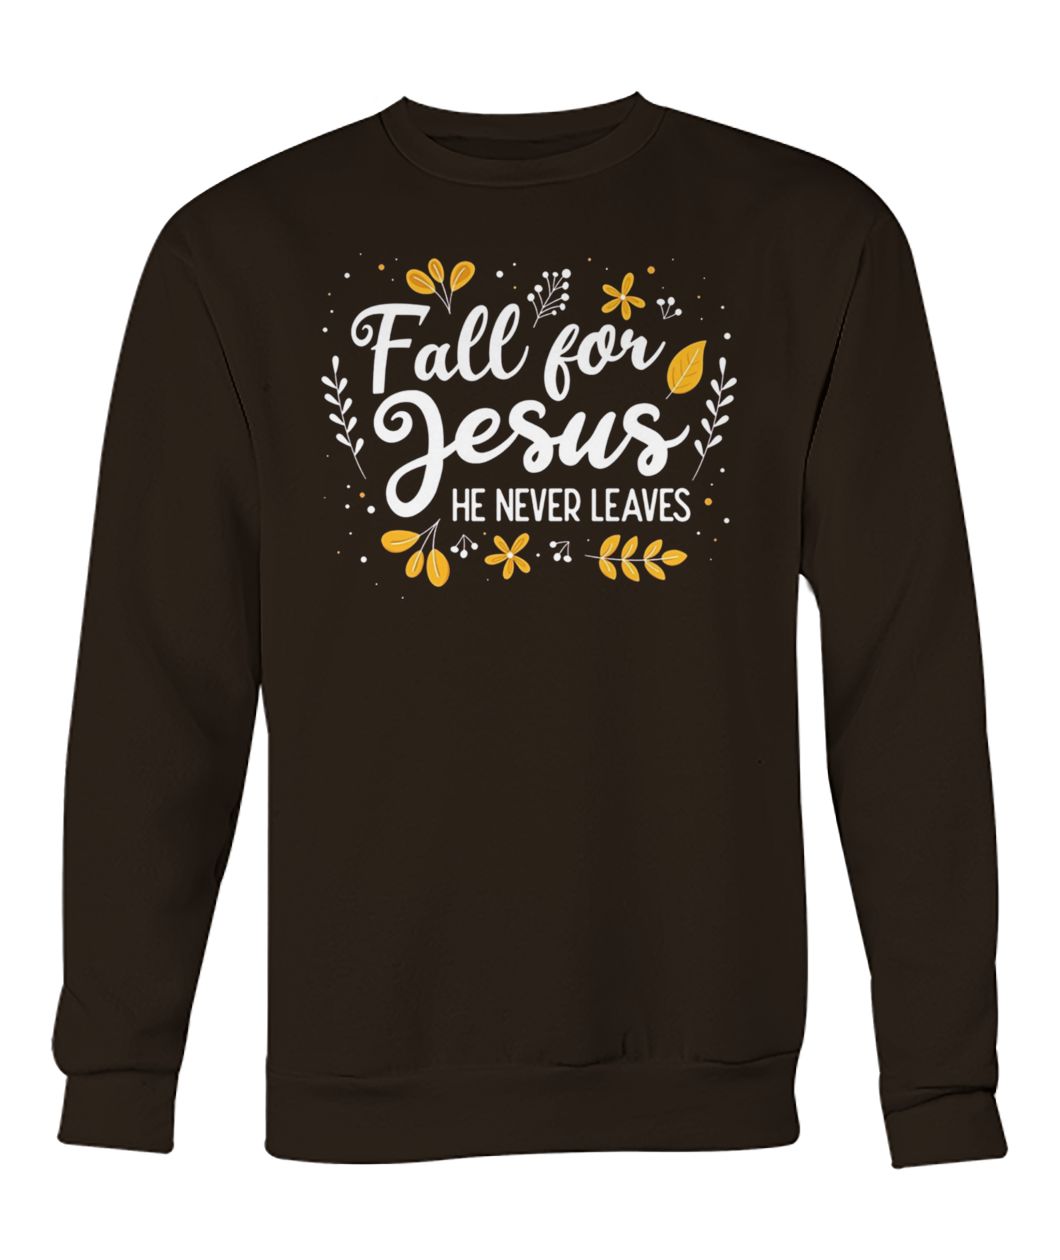 Fall for jesus he never leaves crew neck sweatshirt